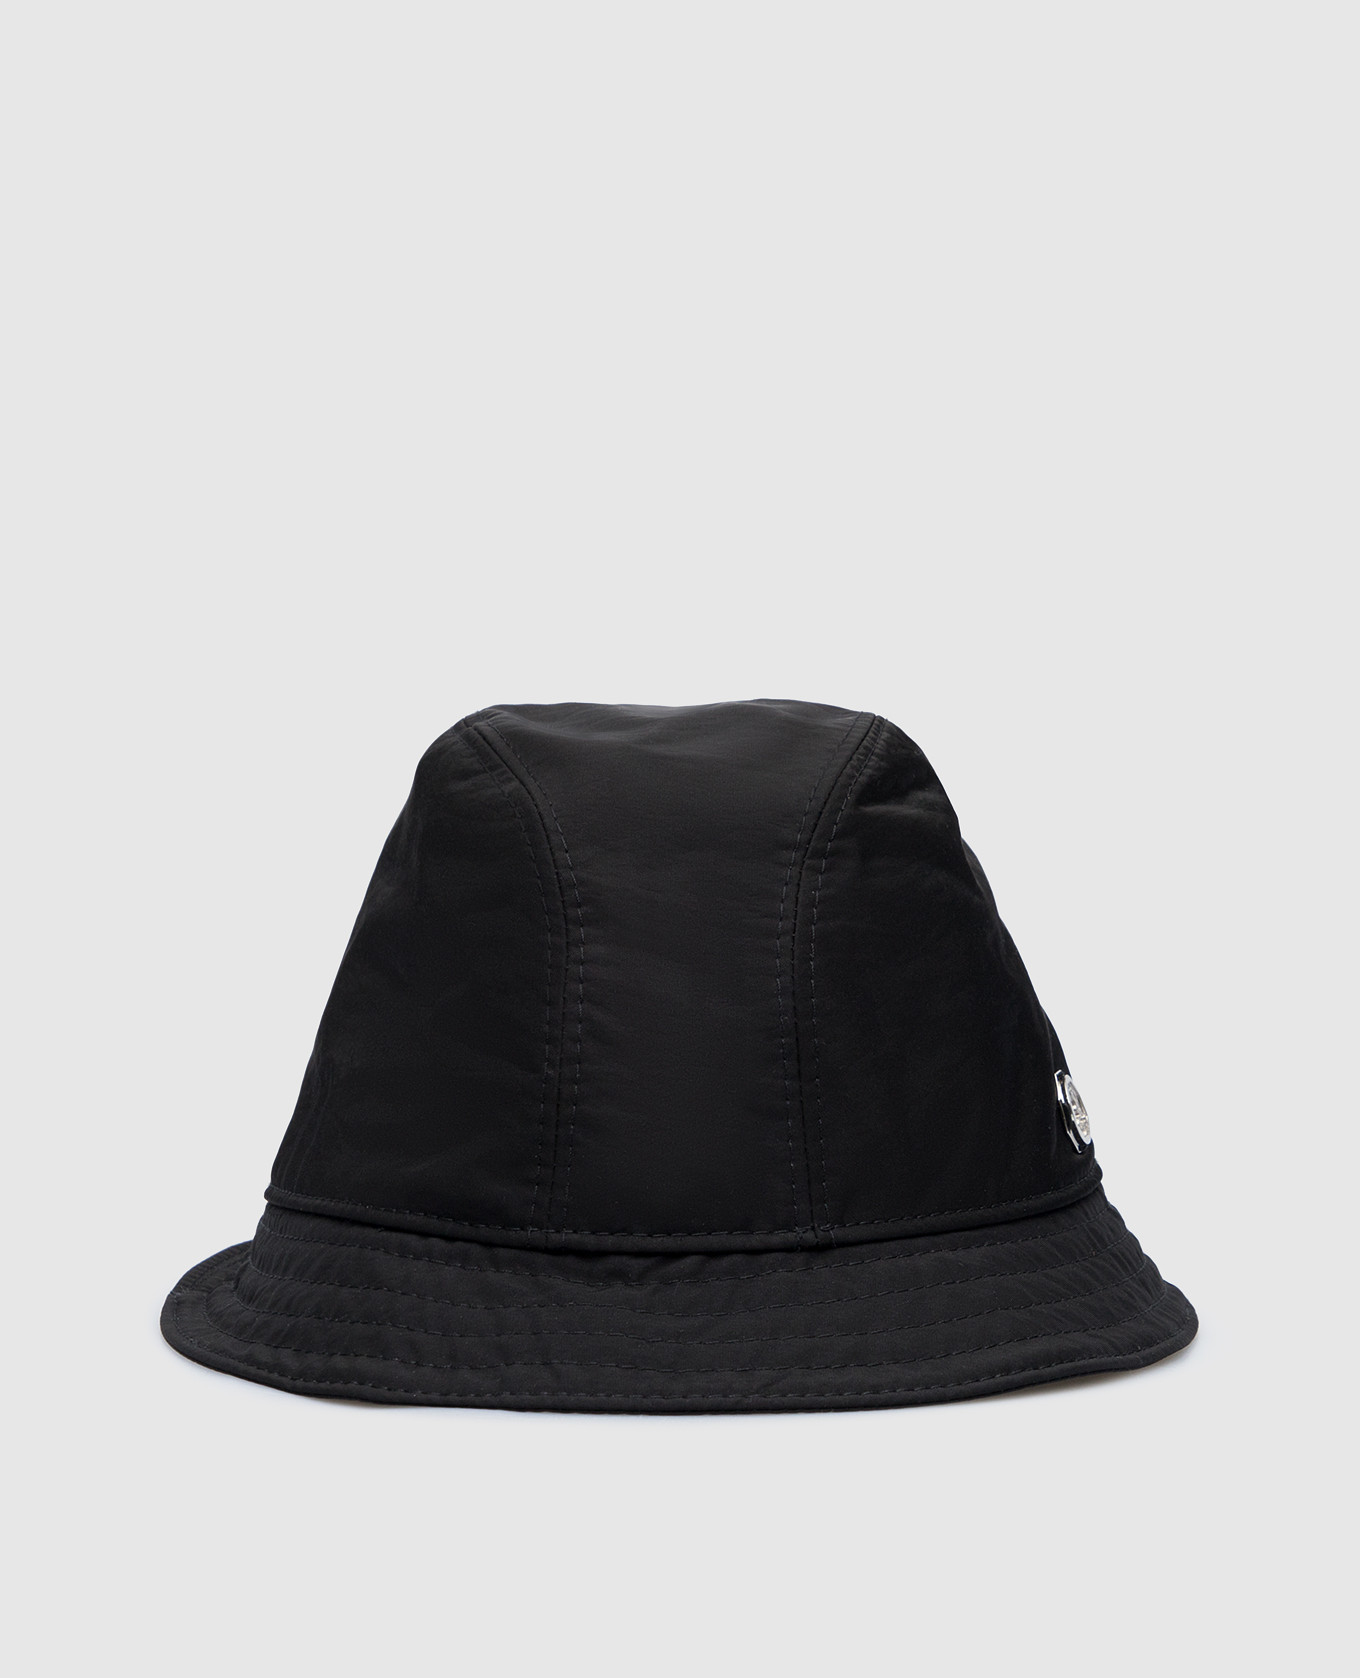 Children's black bucket hat with metal emblem